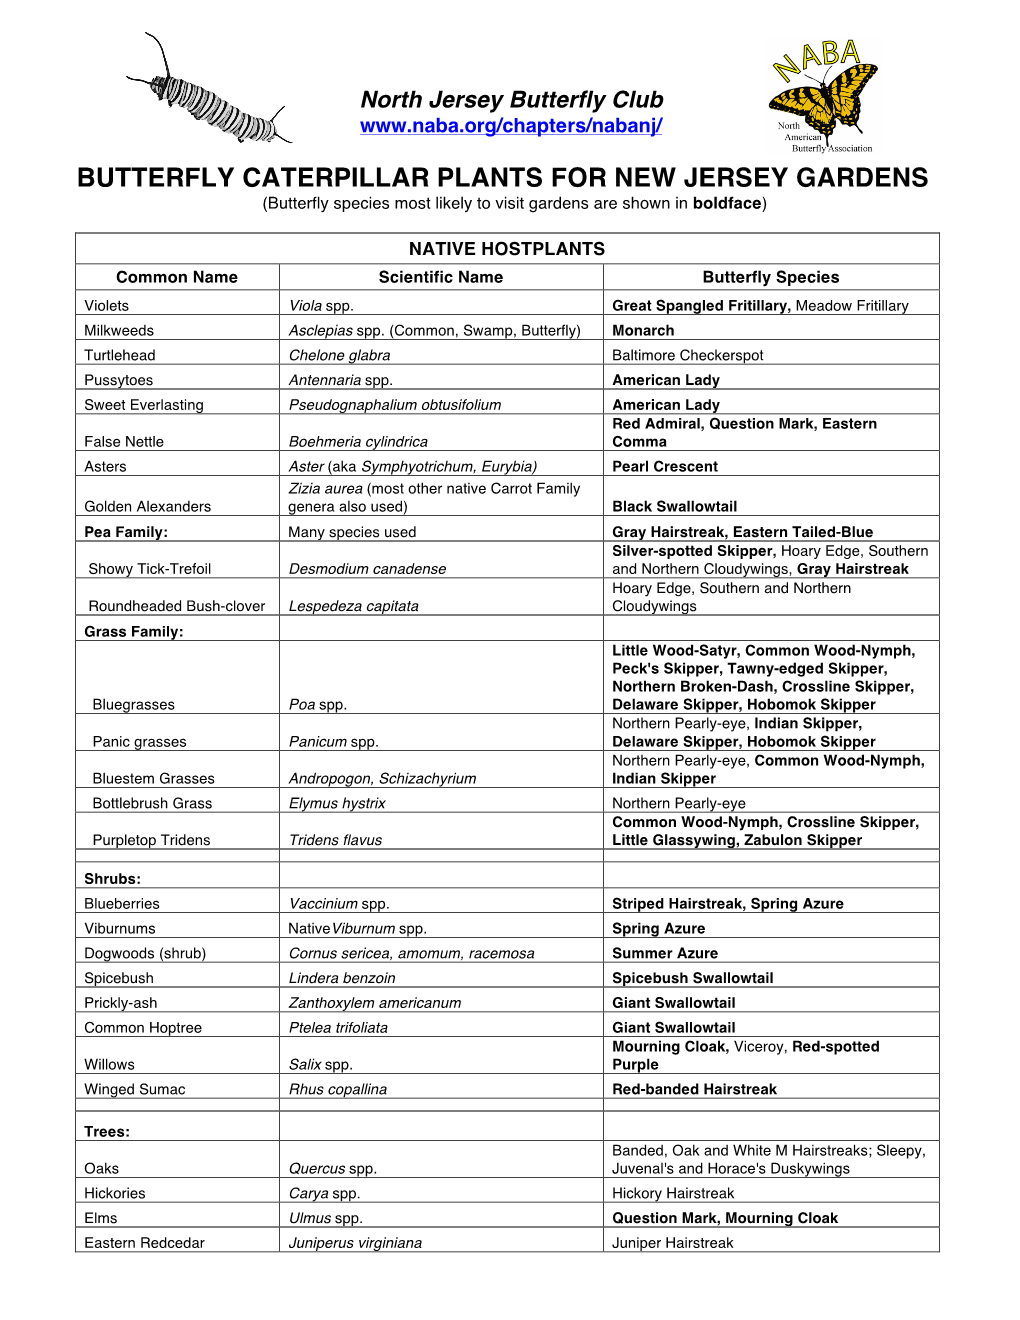 Butterfly Caterpillar Host Plants for New Jersey Gardens